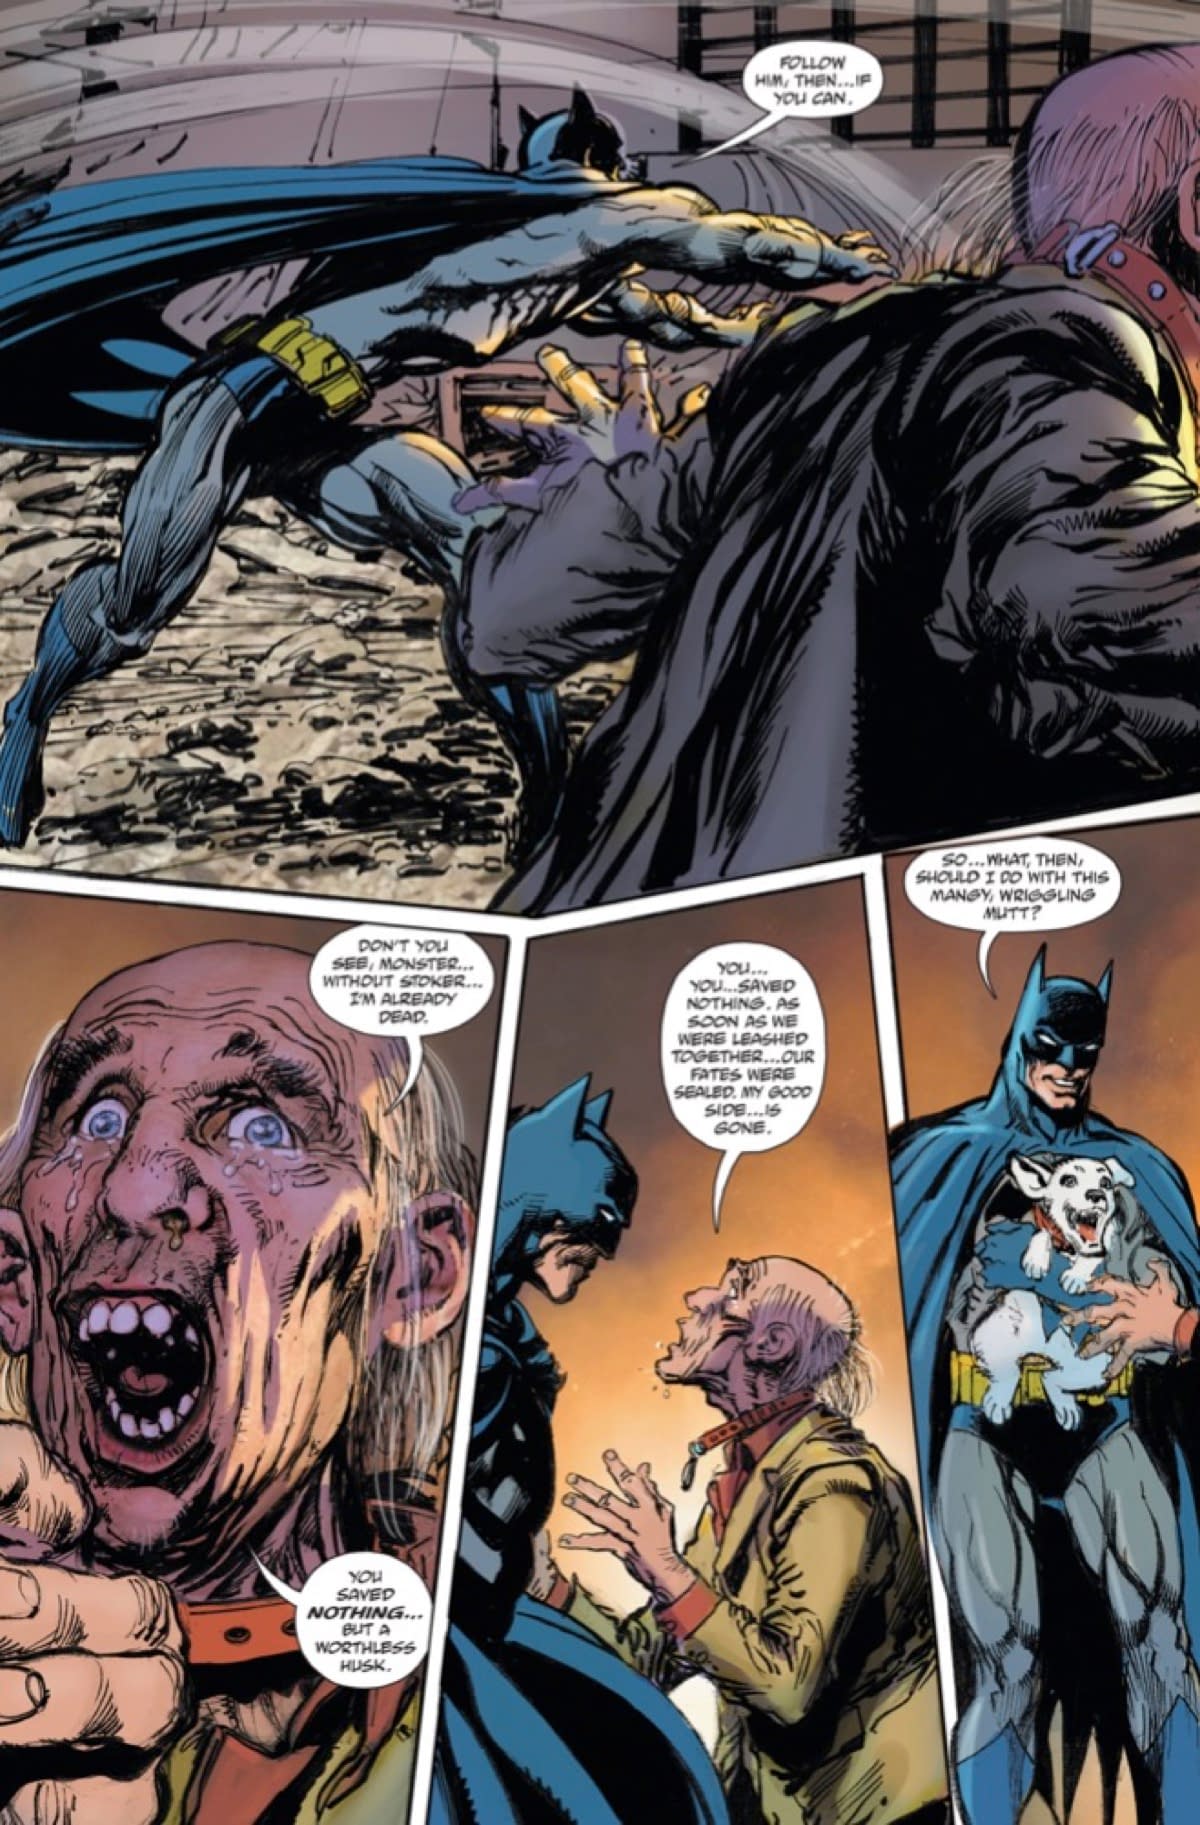 EXCLUSIVE Batman Vs. Ra's Al Ghul #1 Preview